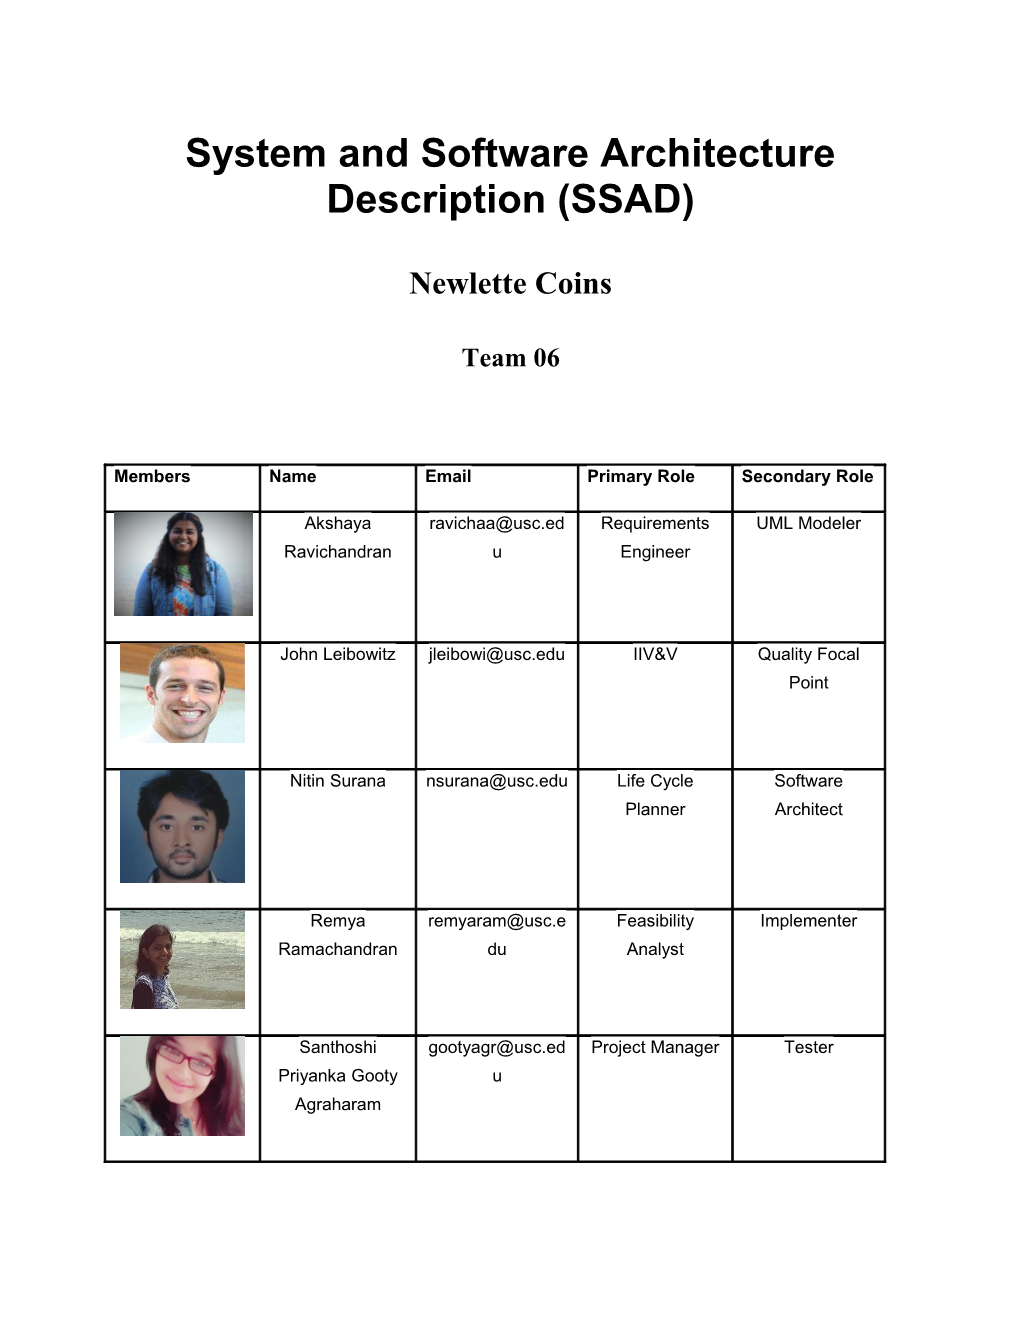 System and Software Architecture Description (SSAD)